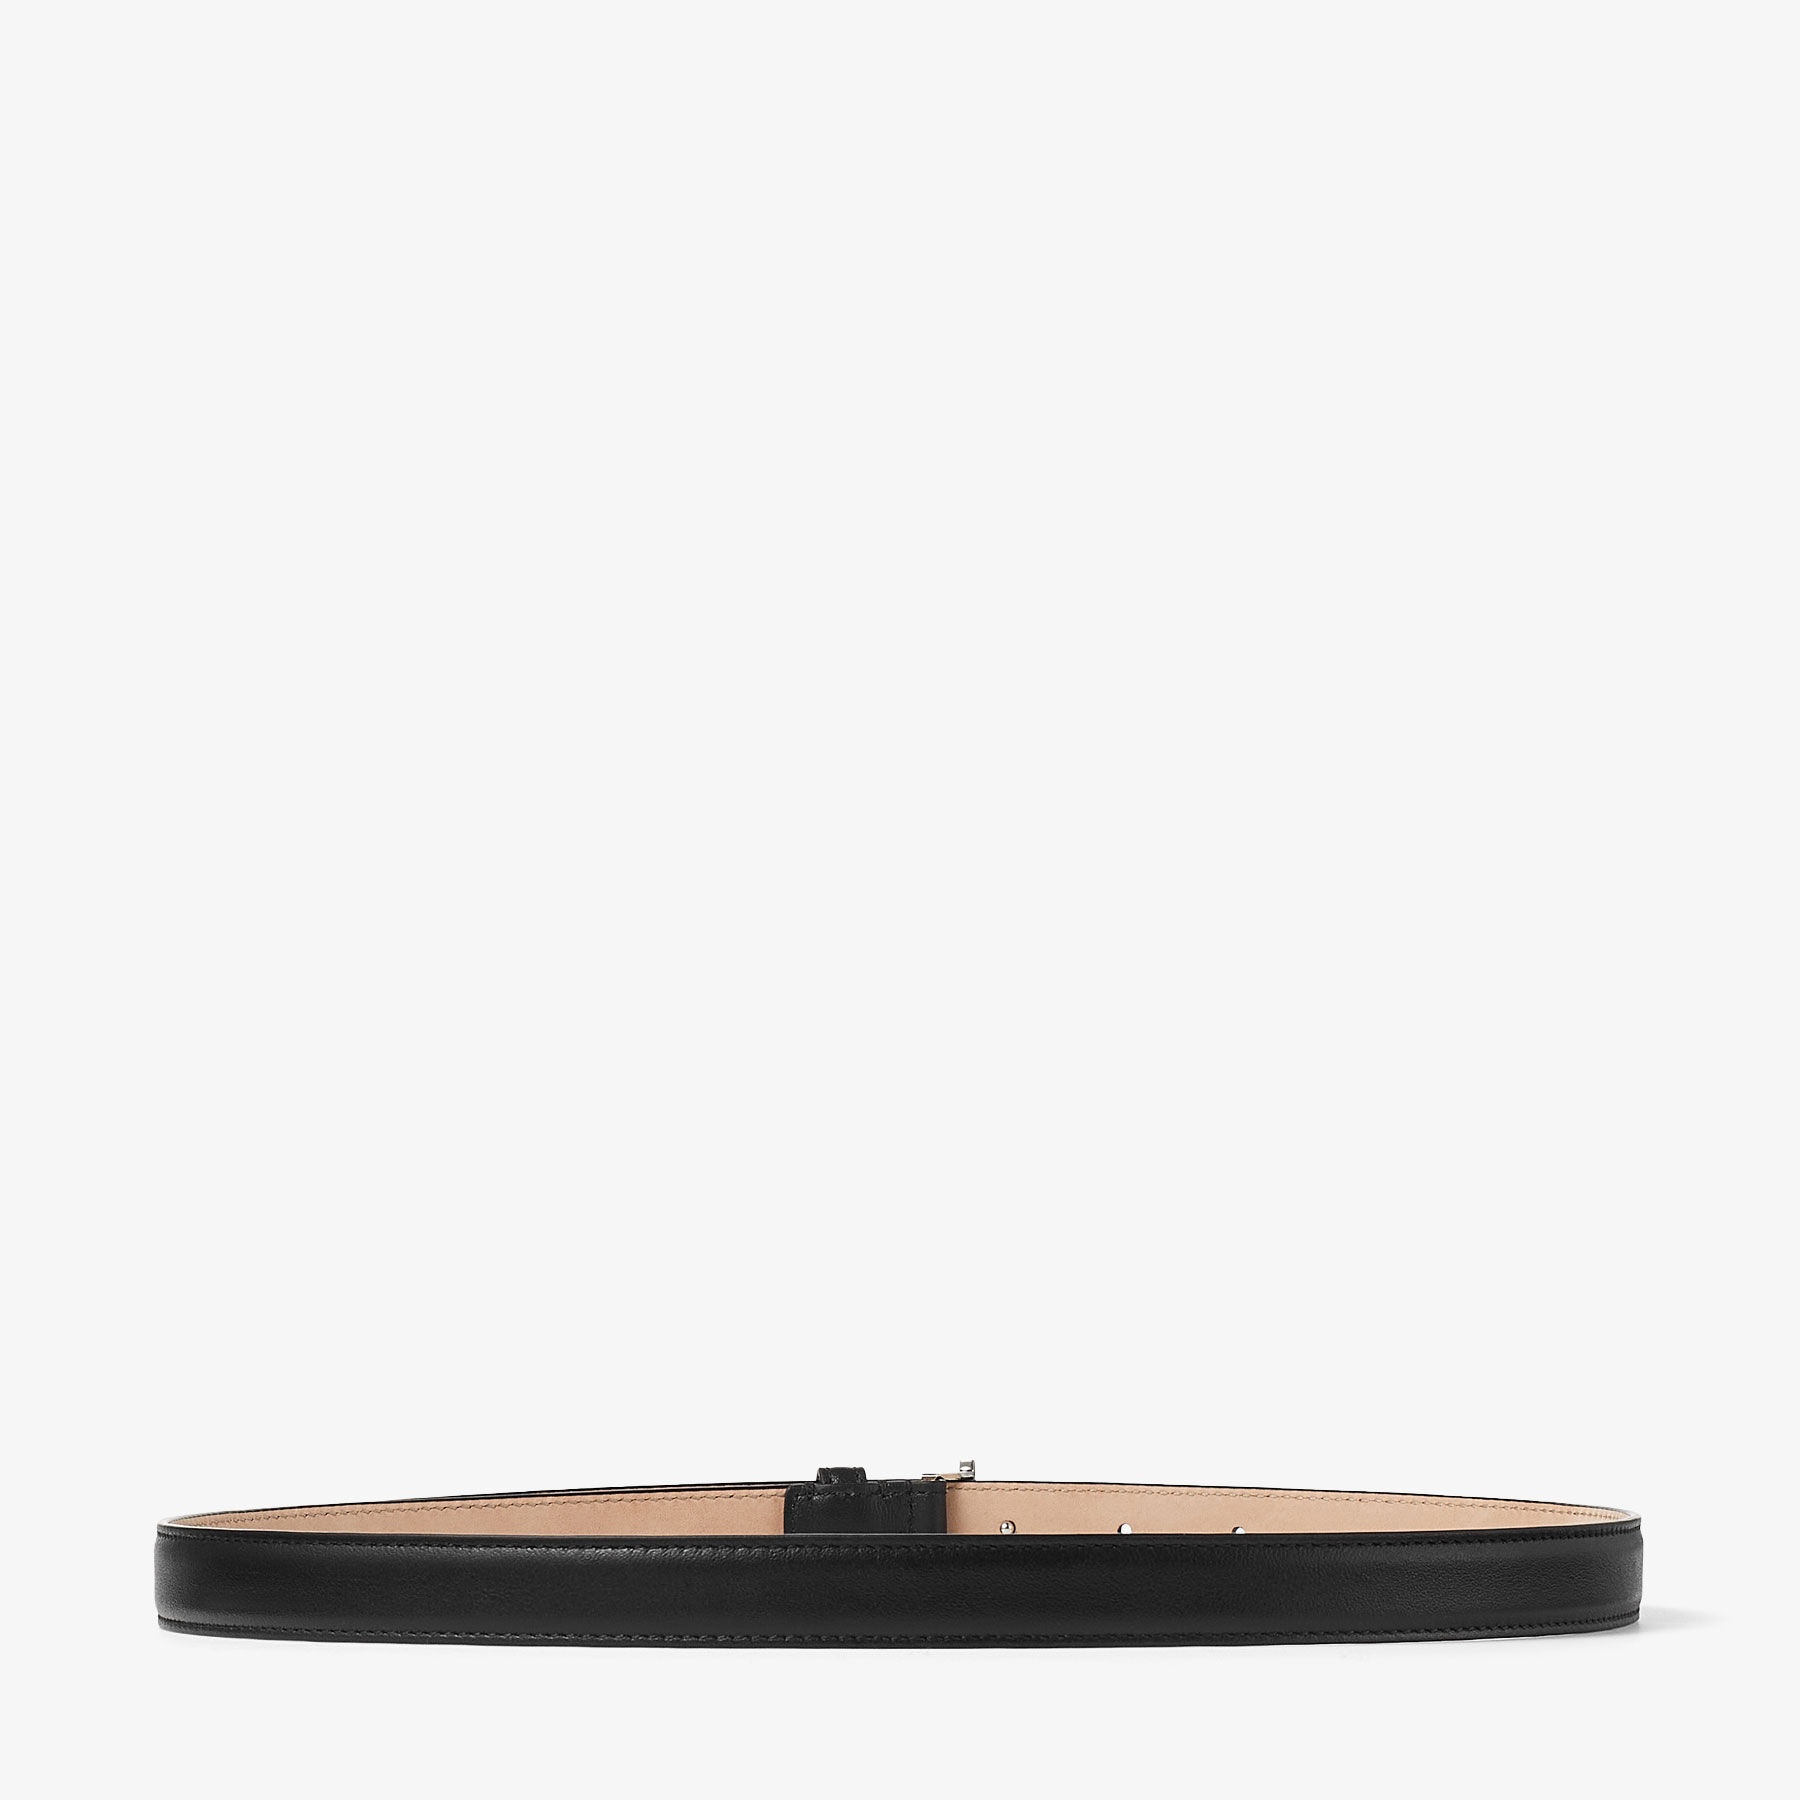 Mini Helina
Black Smooth Leather Mini Belt - 4